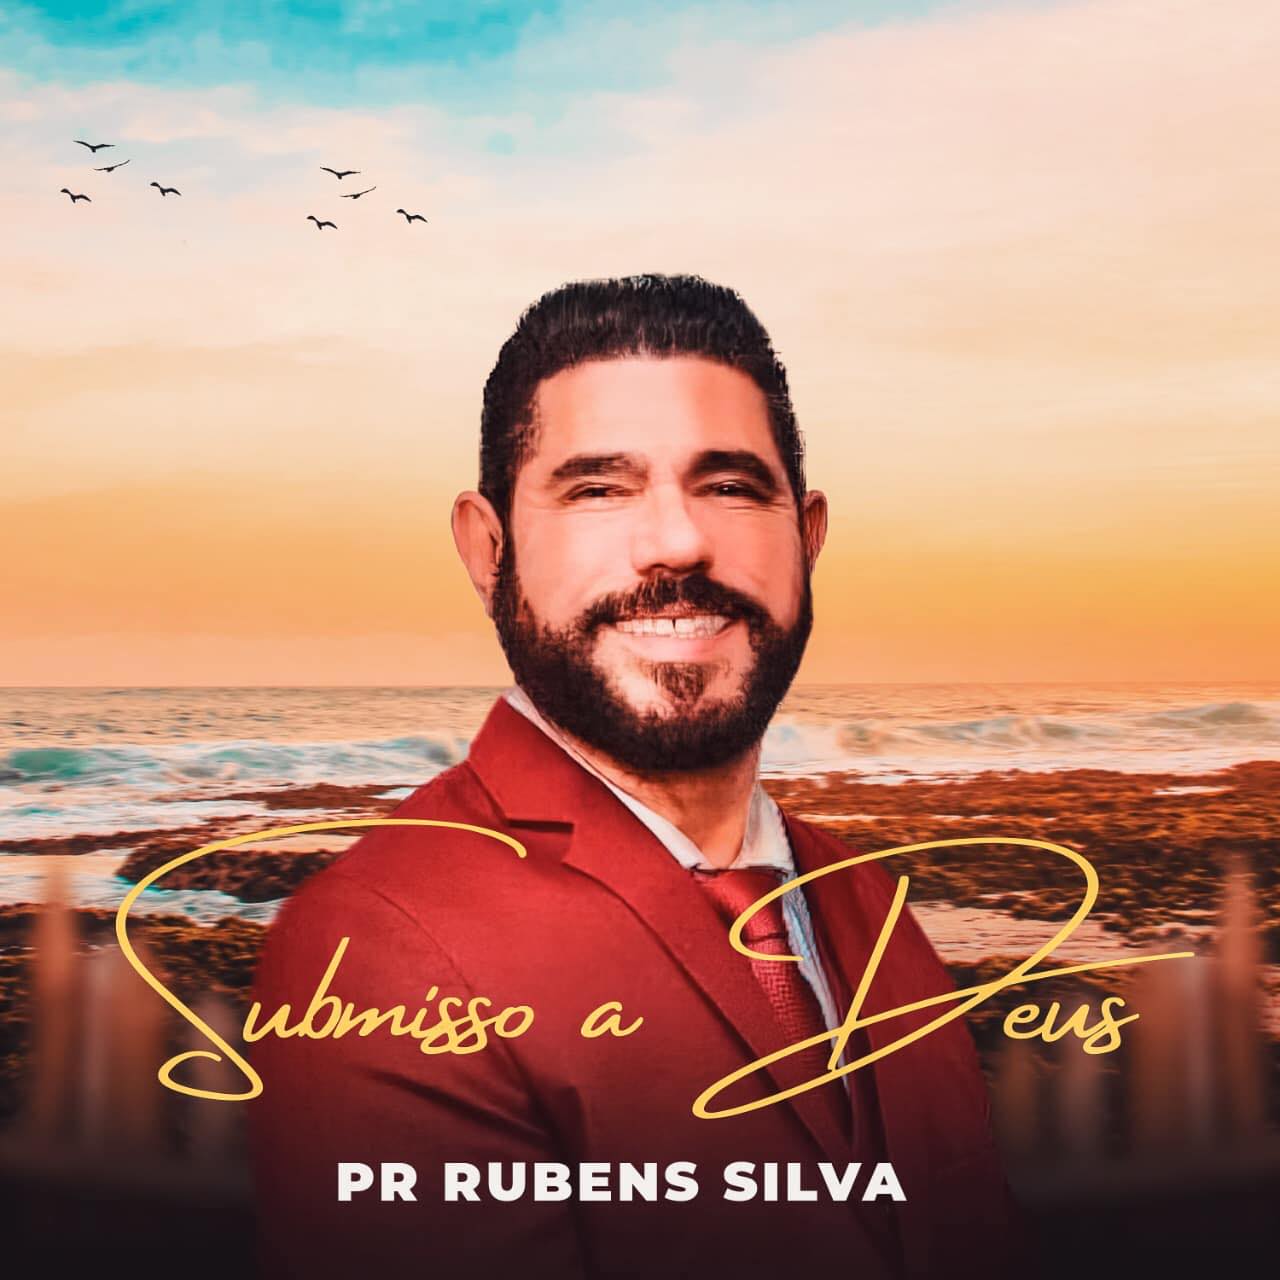 PastorRubens Silva